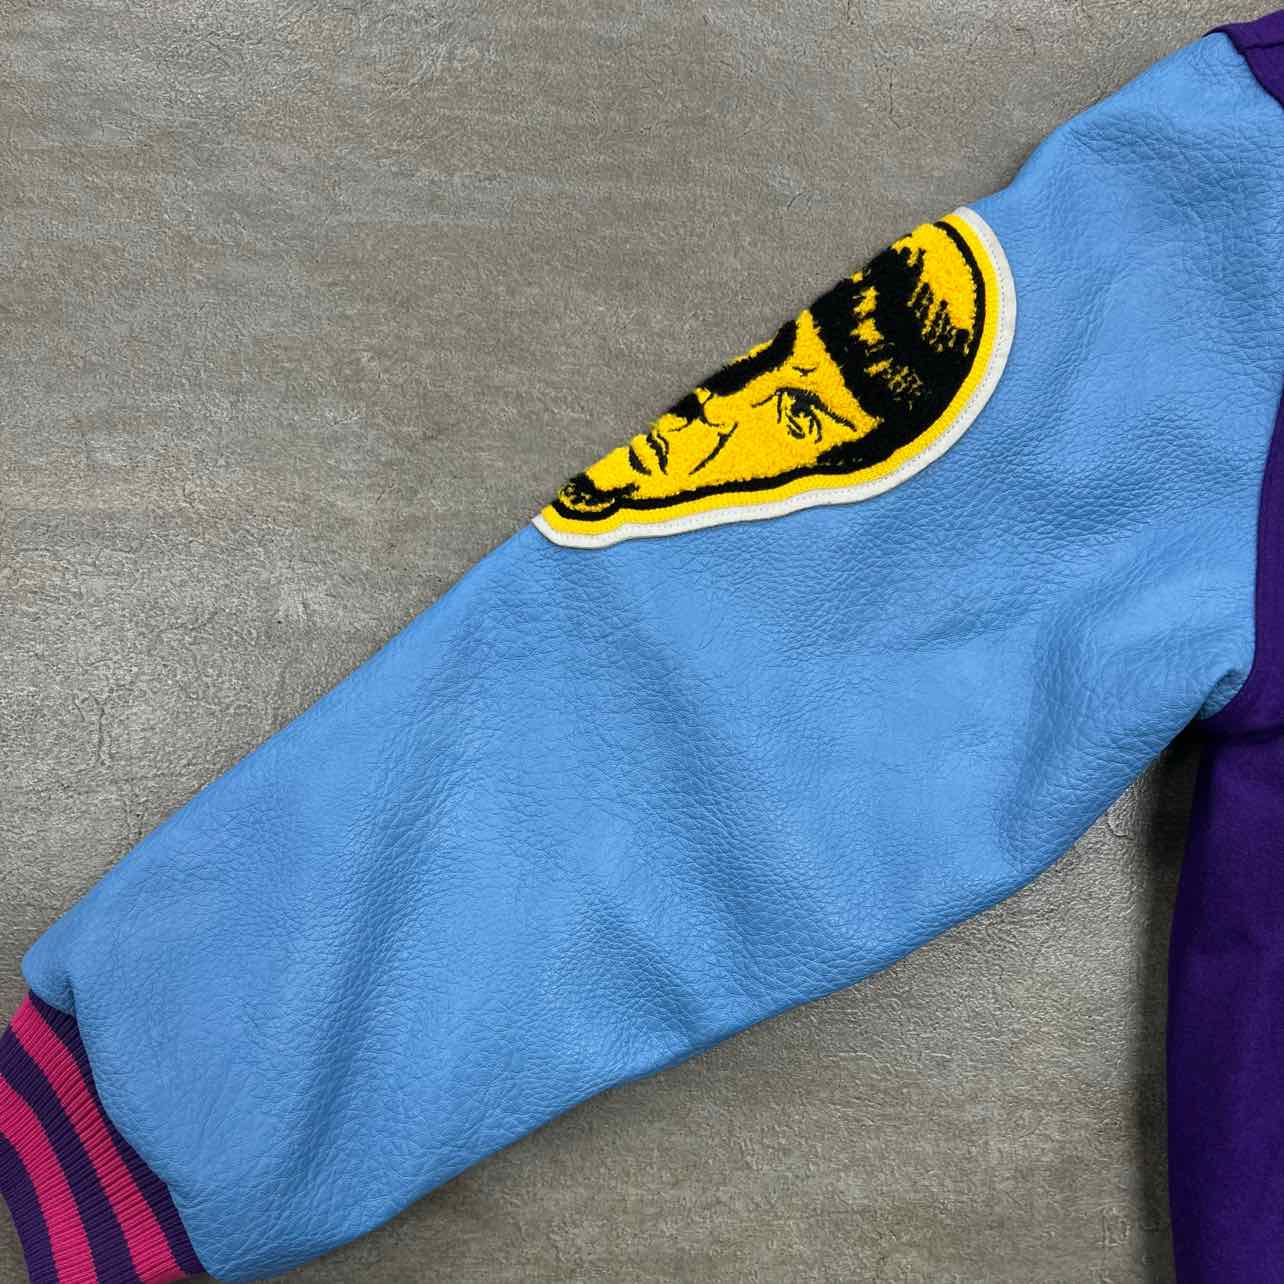 Kid Cudi Varsity Jacket &quot;STAR TREK&quot; Multi-Color New Size M